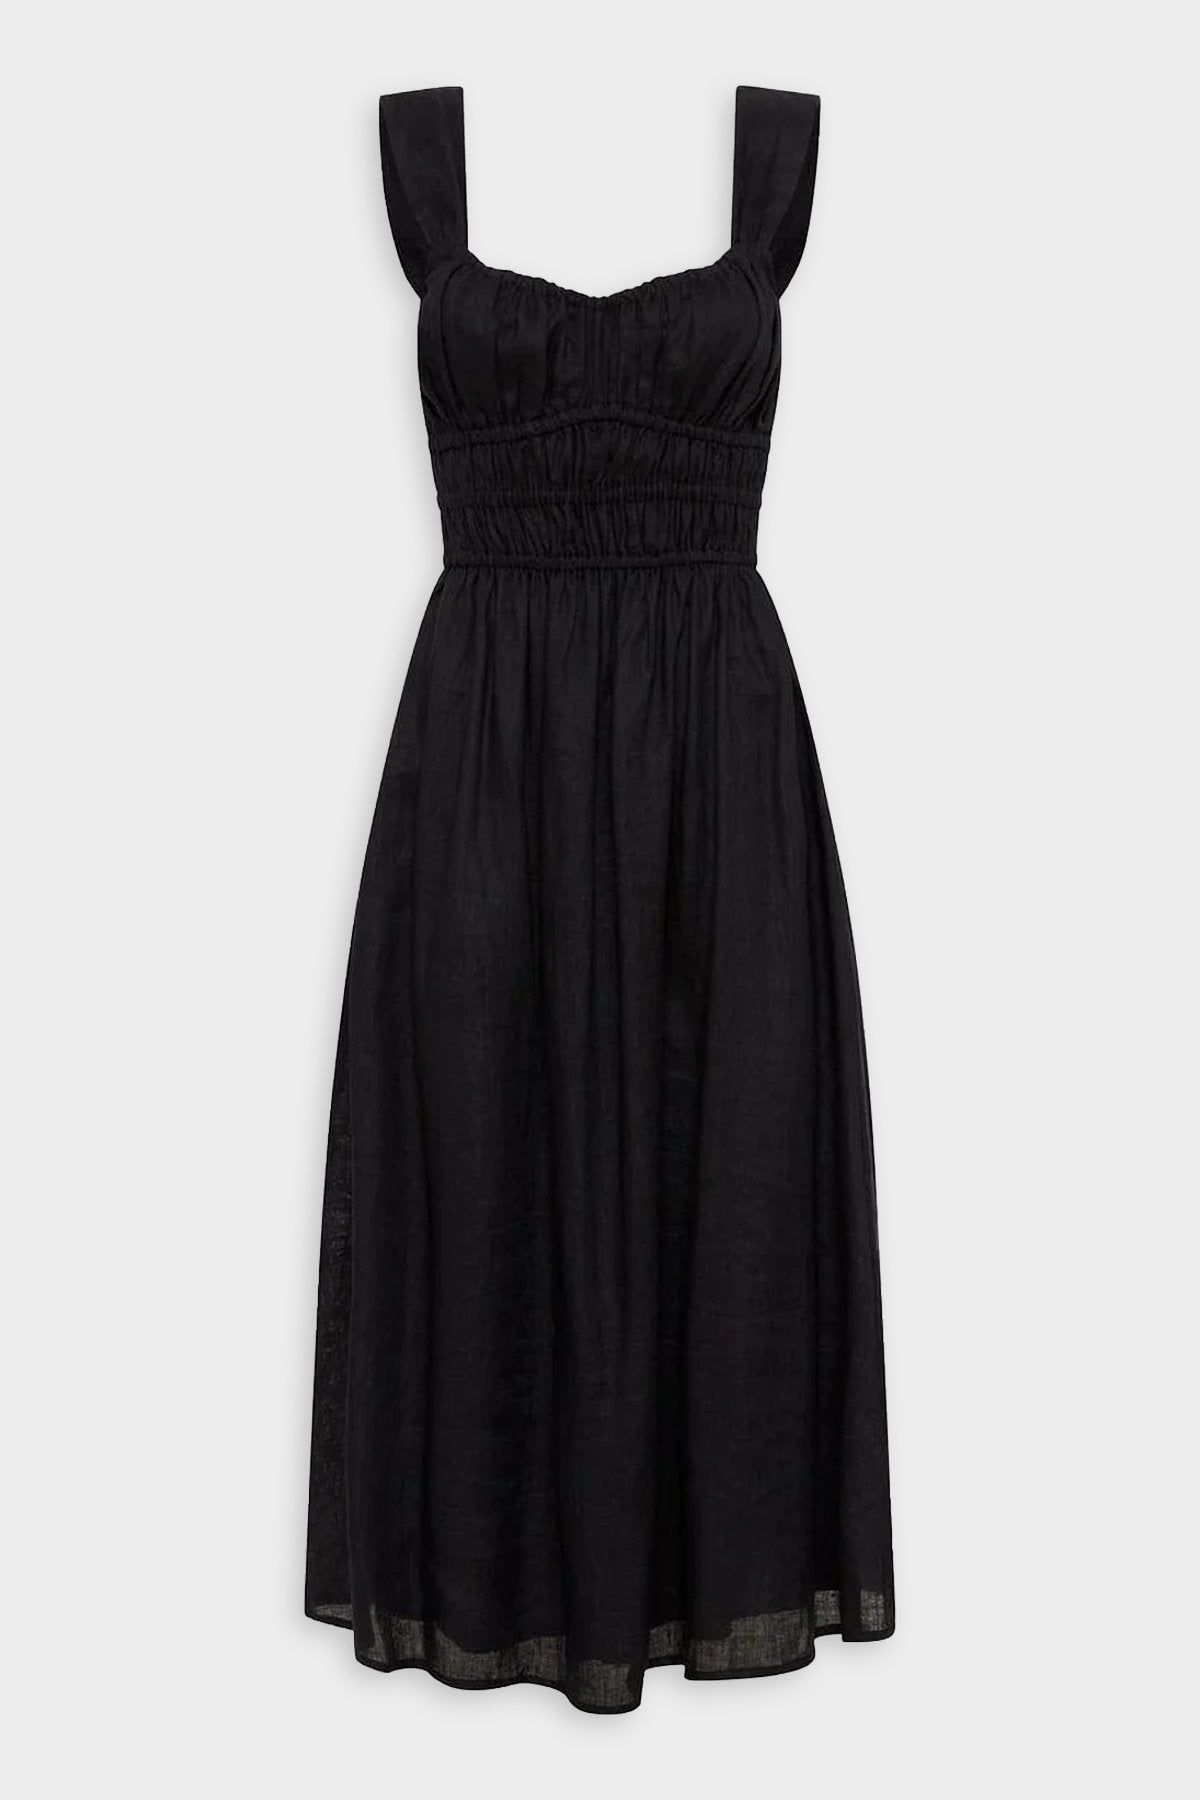 Emory Midi Dress in Black - shop-olivia.com